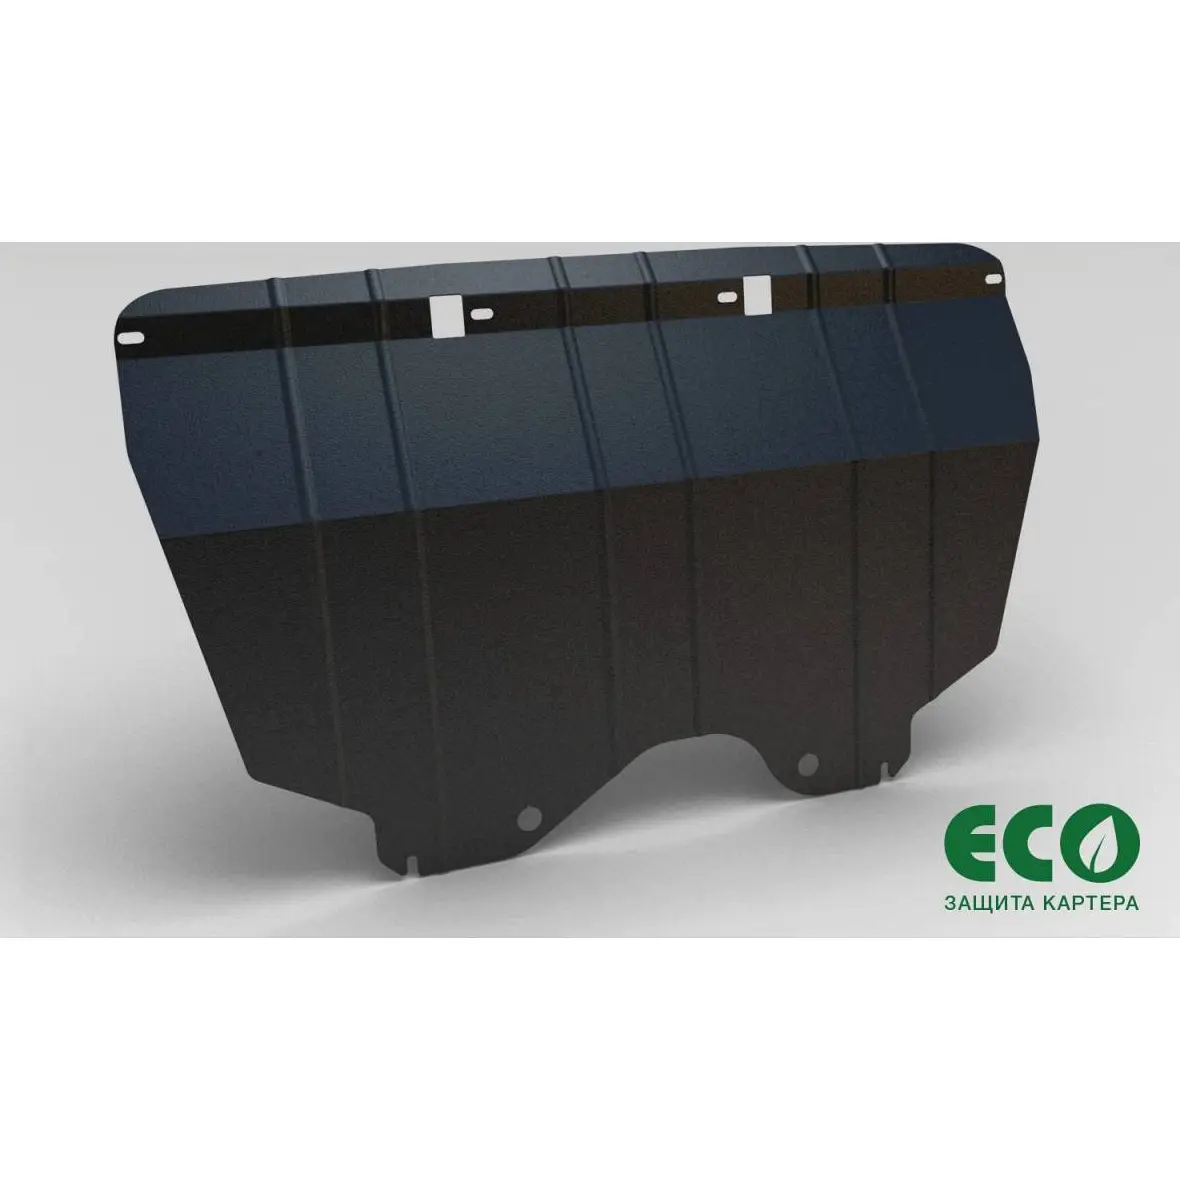 Комплект защиты картера и крепеж Eco 1437099105 5O6 9E eco2036020 XQ5OLR изображение 0